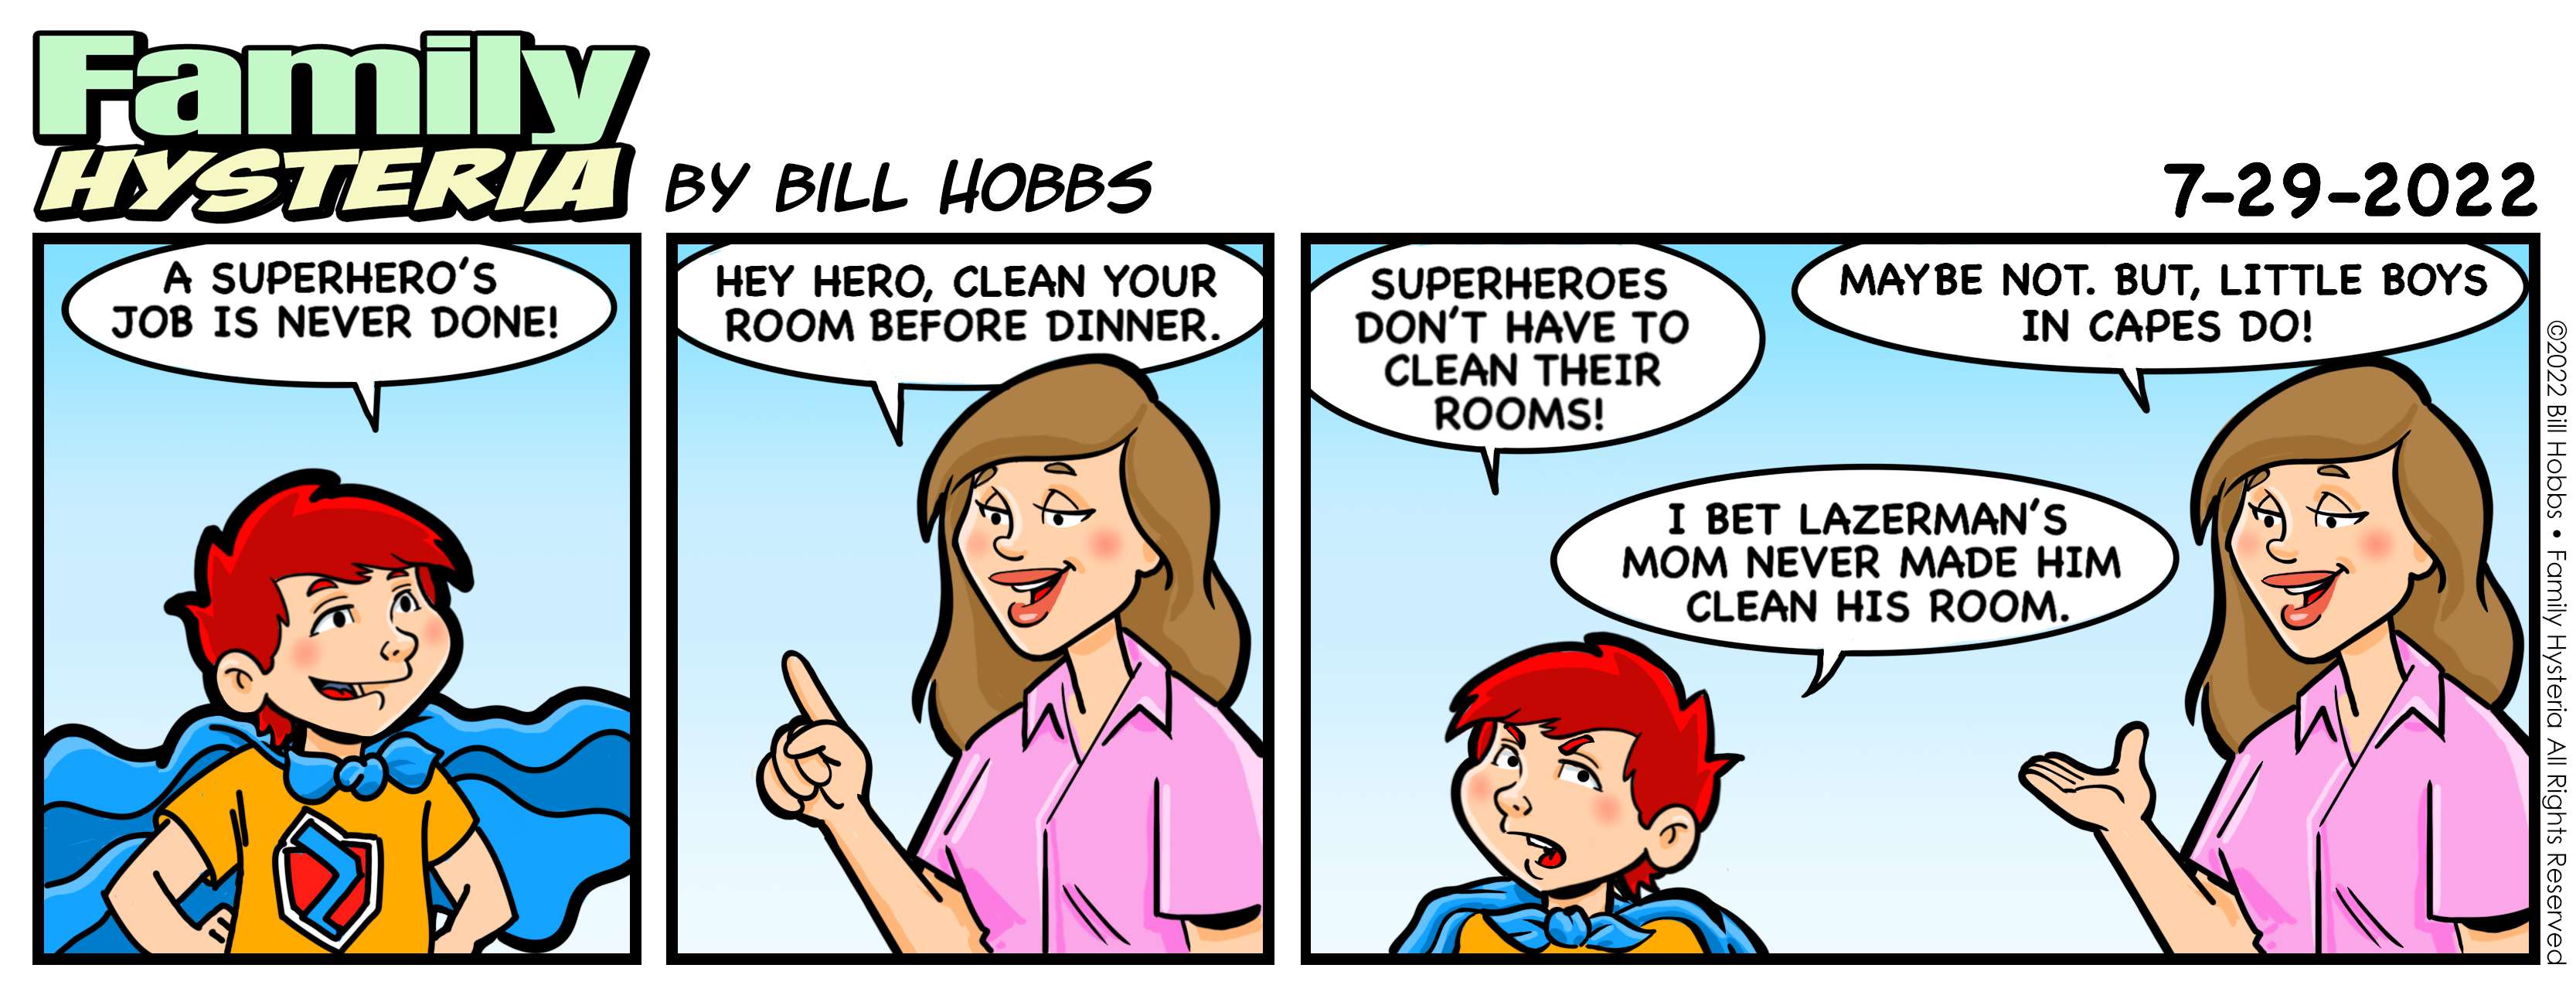 A Superhero's Job